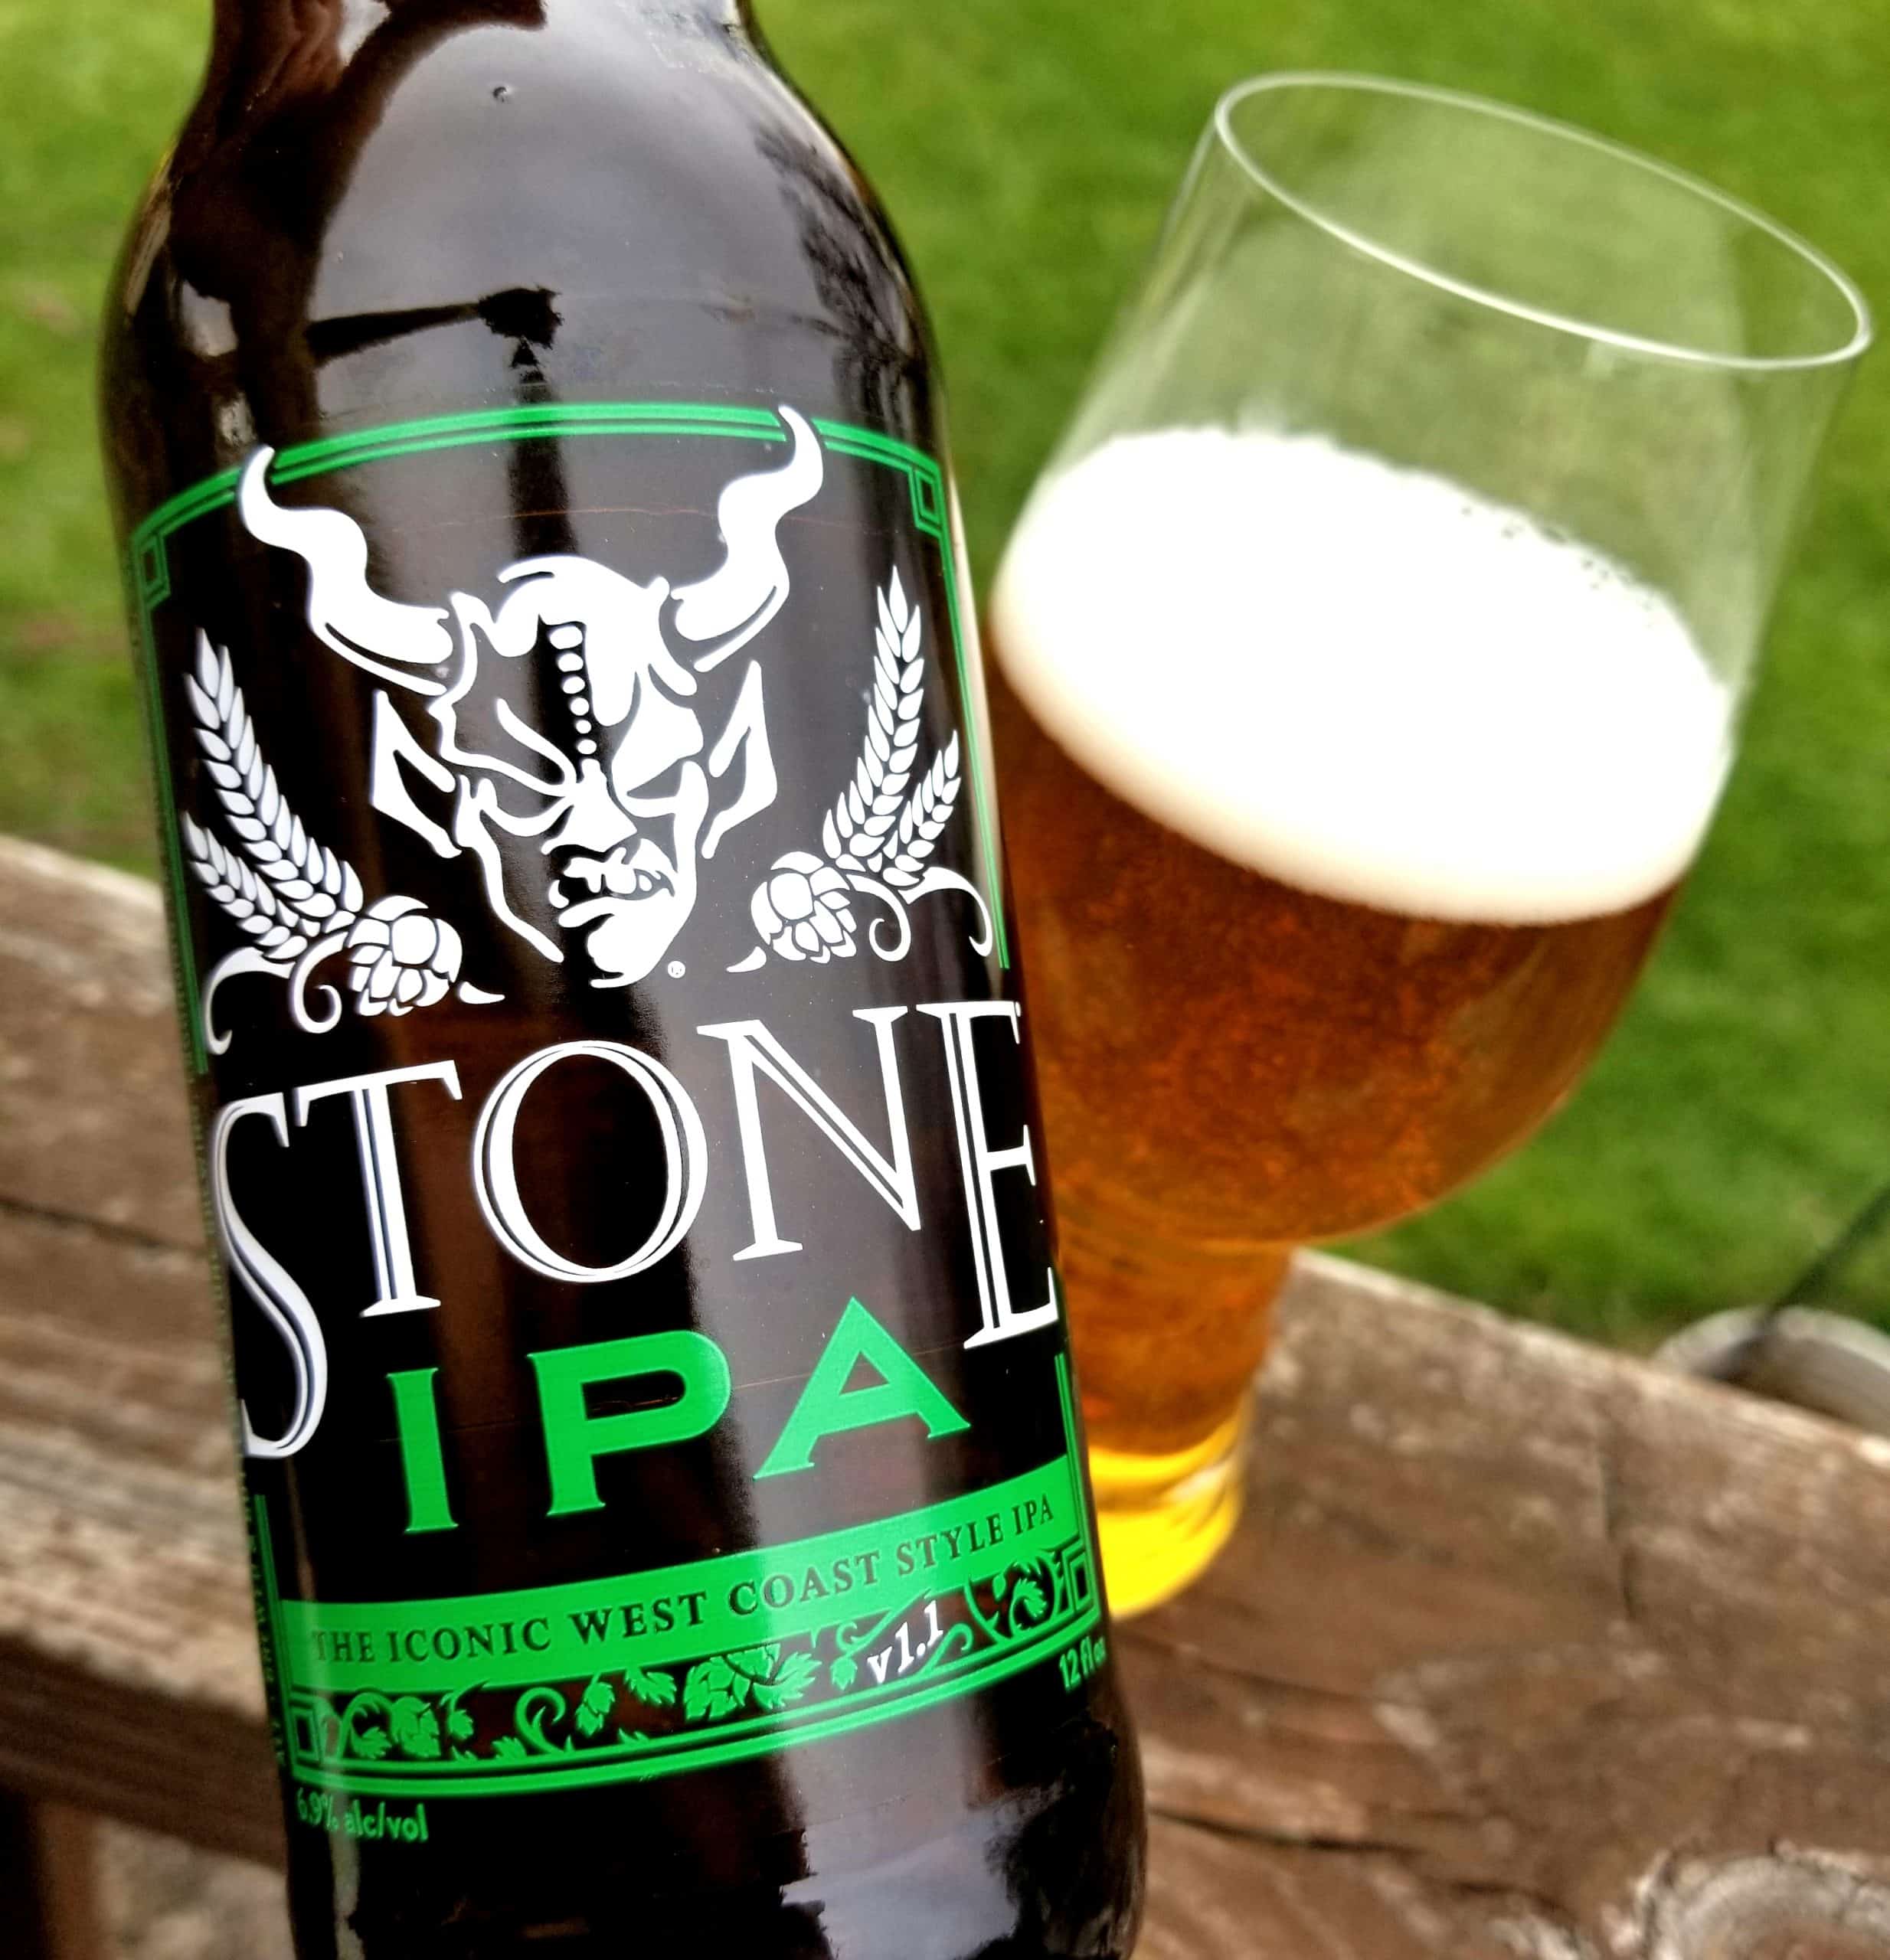 Craft Beer Spotlight: Stone IPA